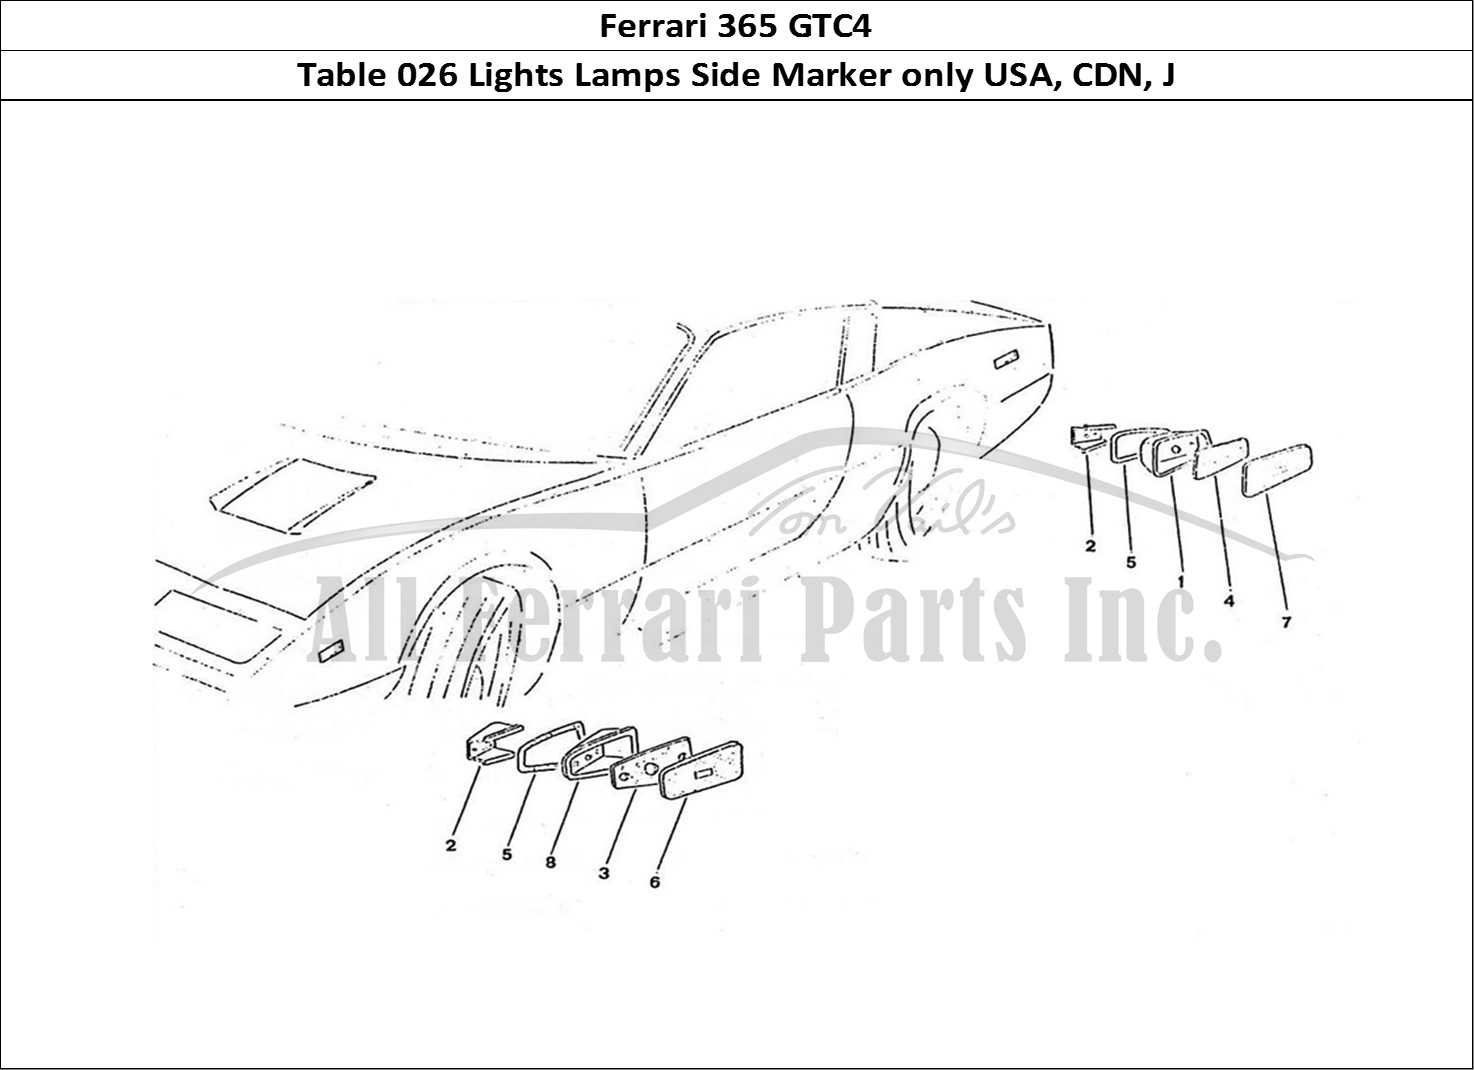 Ferrari Parts Ferrari 365 GTC4 (Coachwork) Page 026 Side - Markers For USA-C